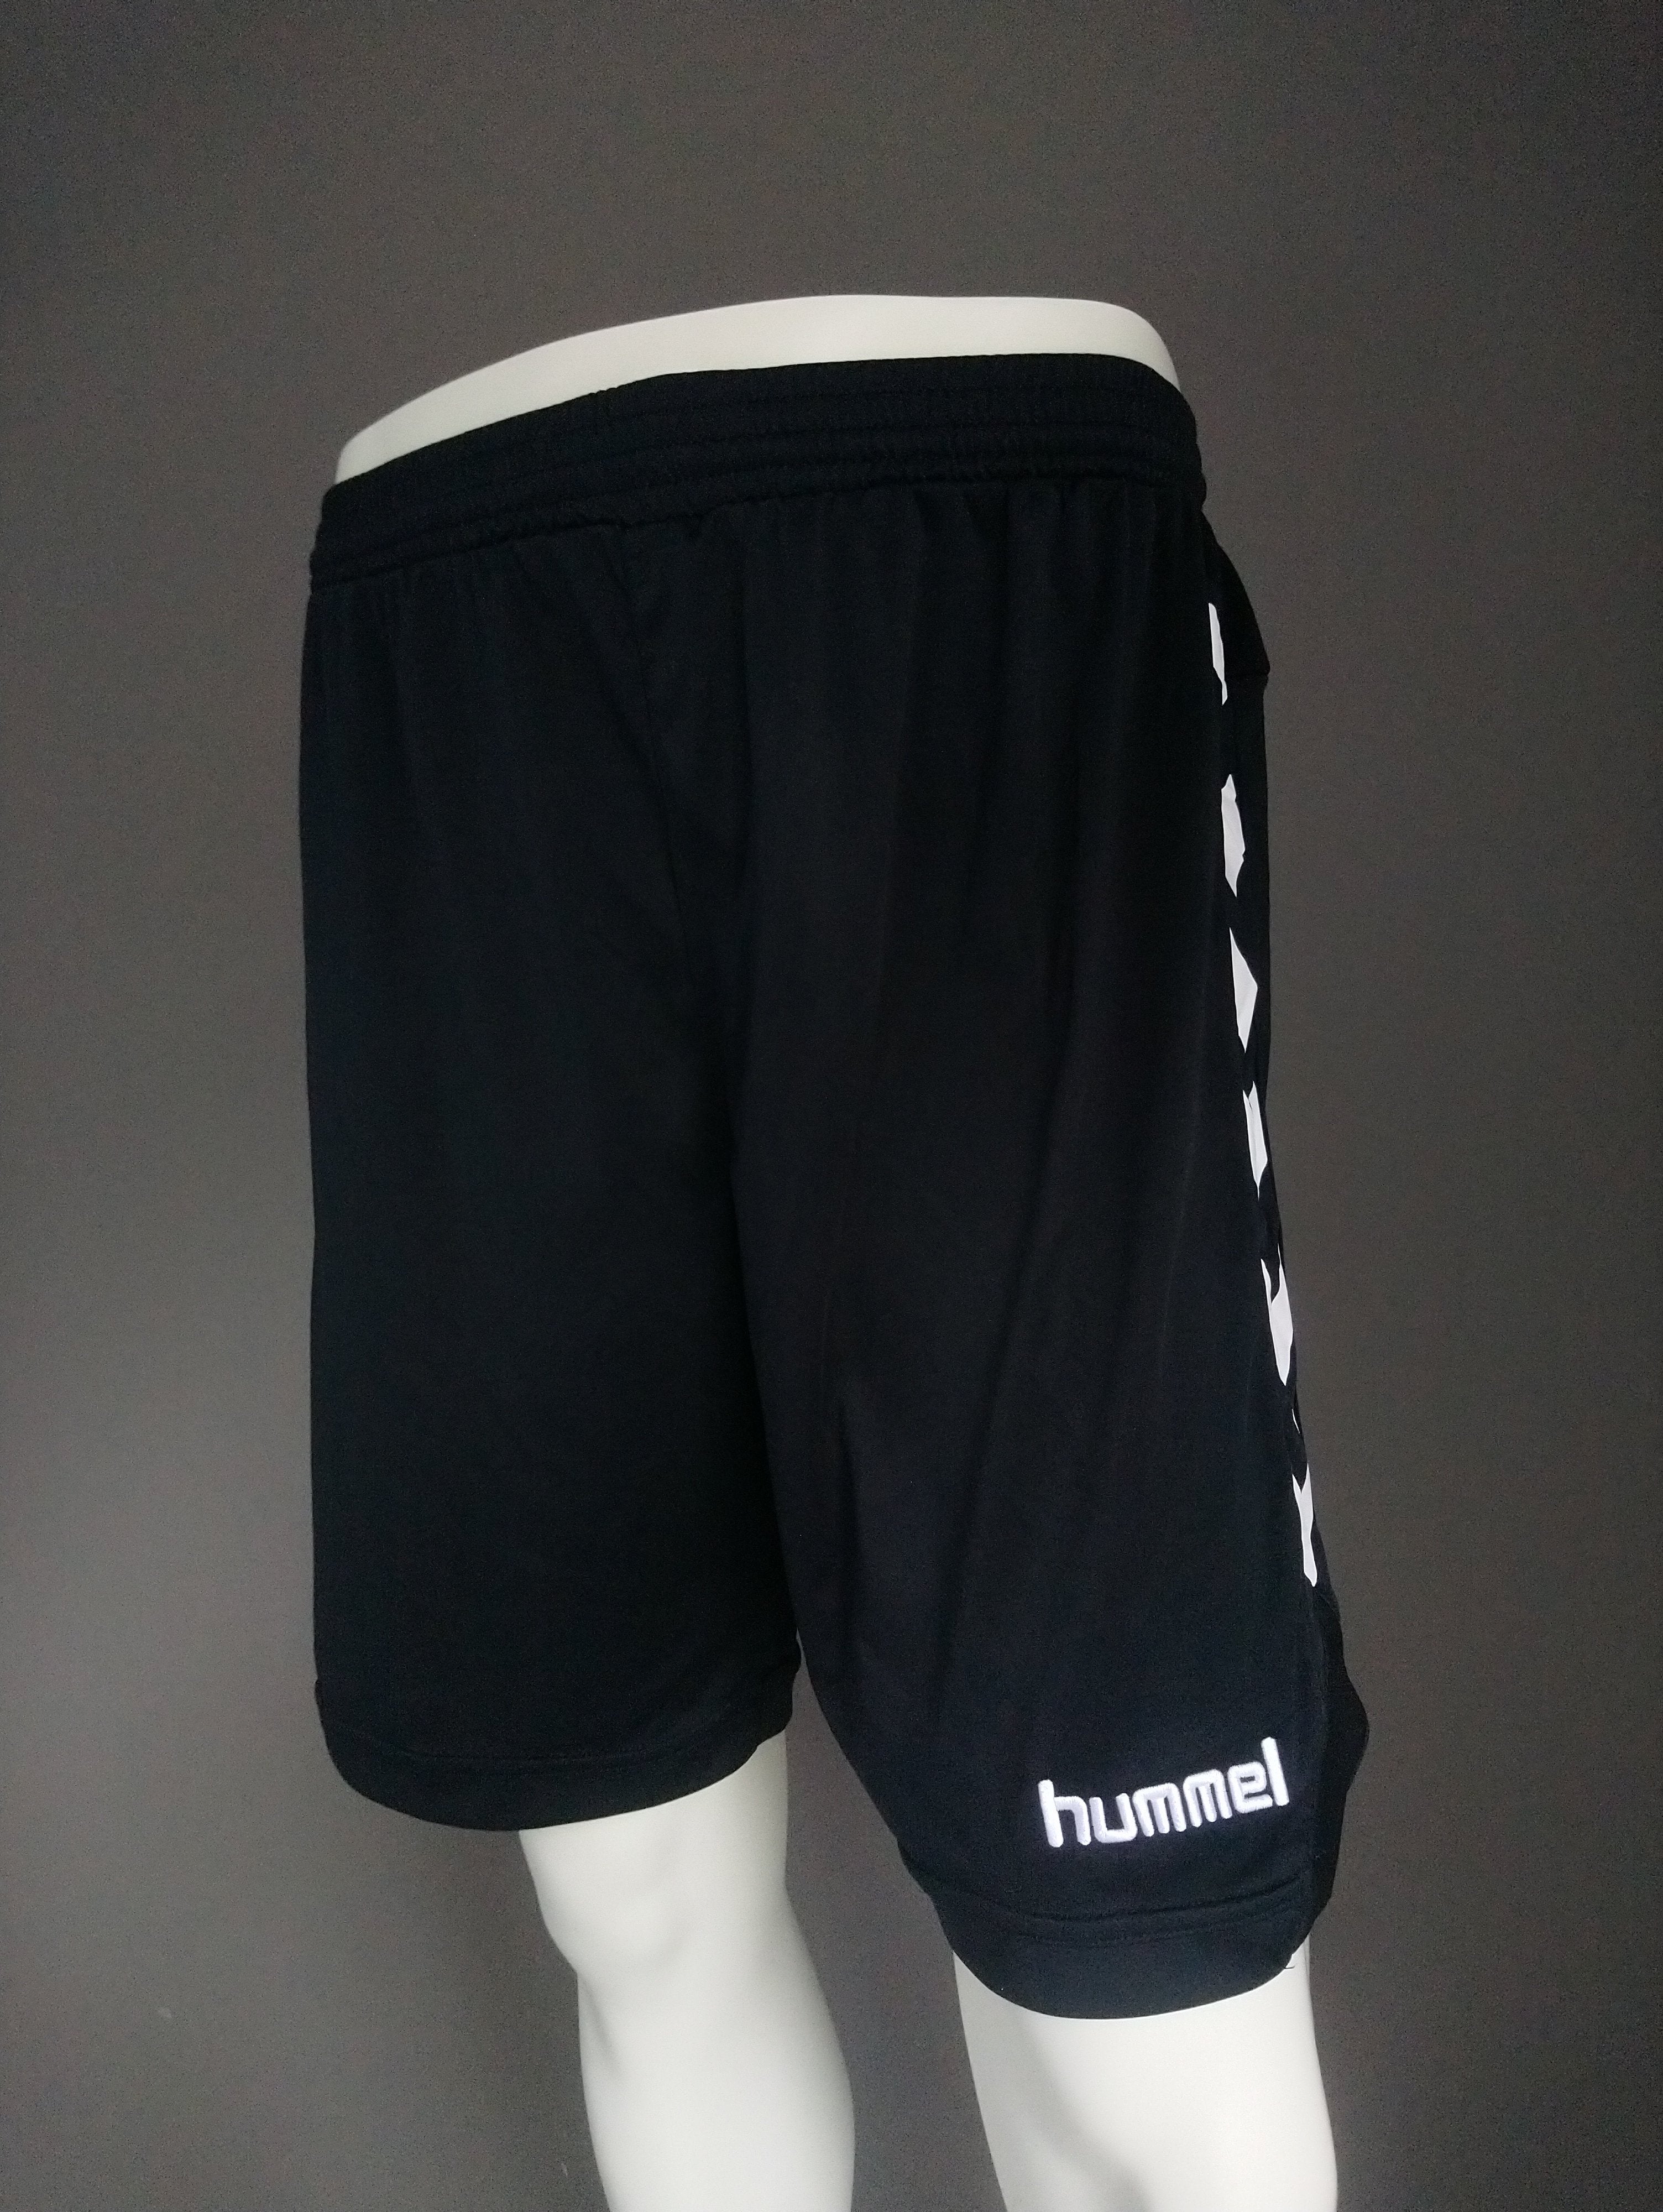 Zinloos lepel roestvrij Hummel sports shorts. Black white colored. Size XL | EcoGents